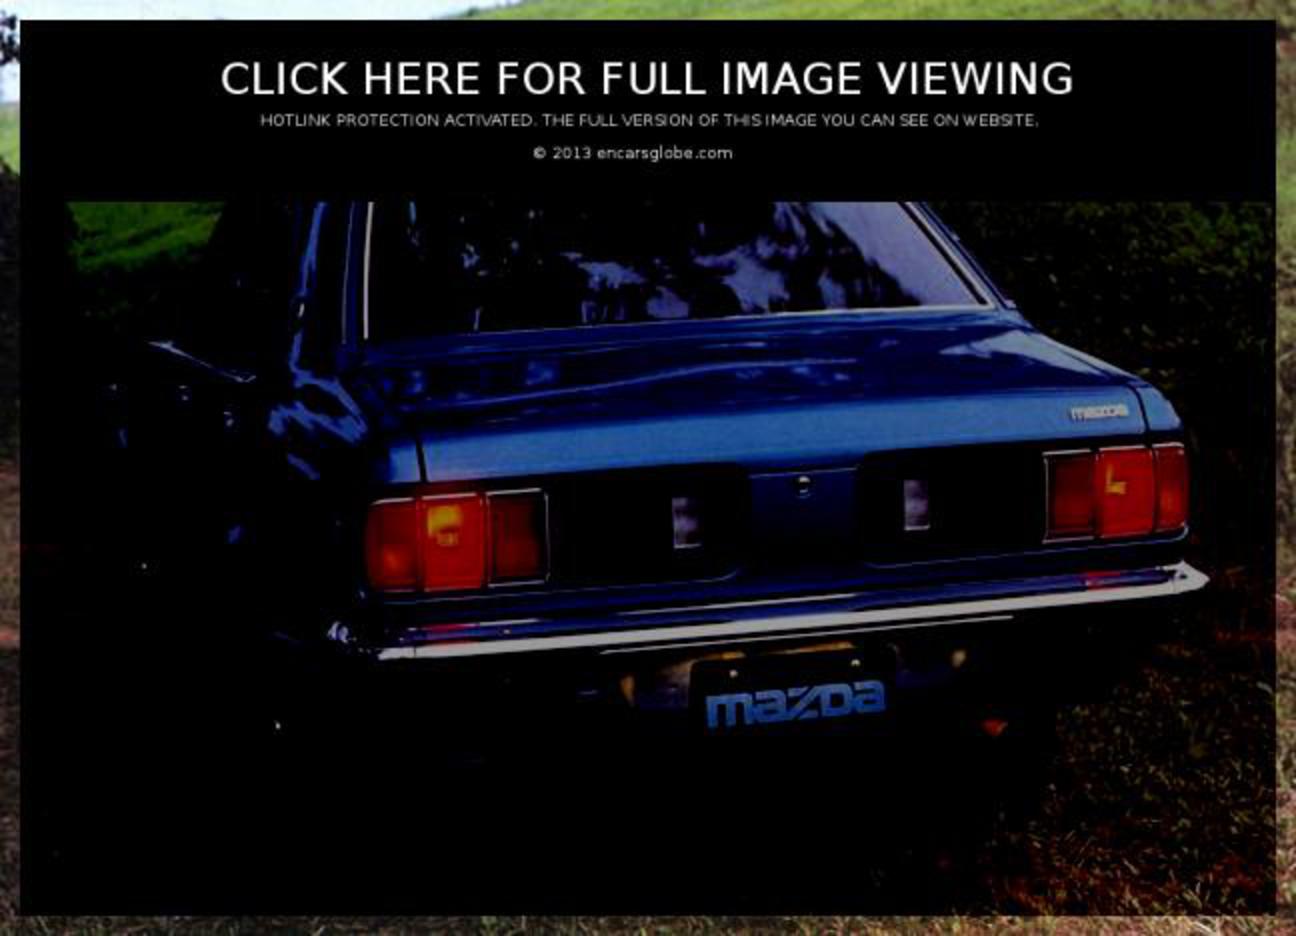 Mazda 818 (08 image)